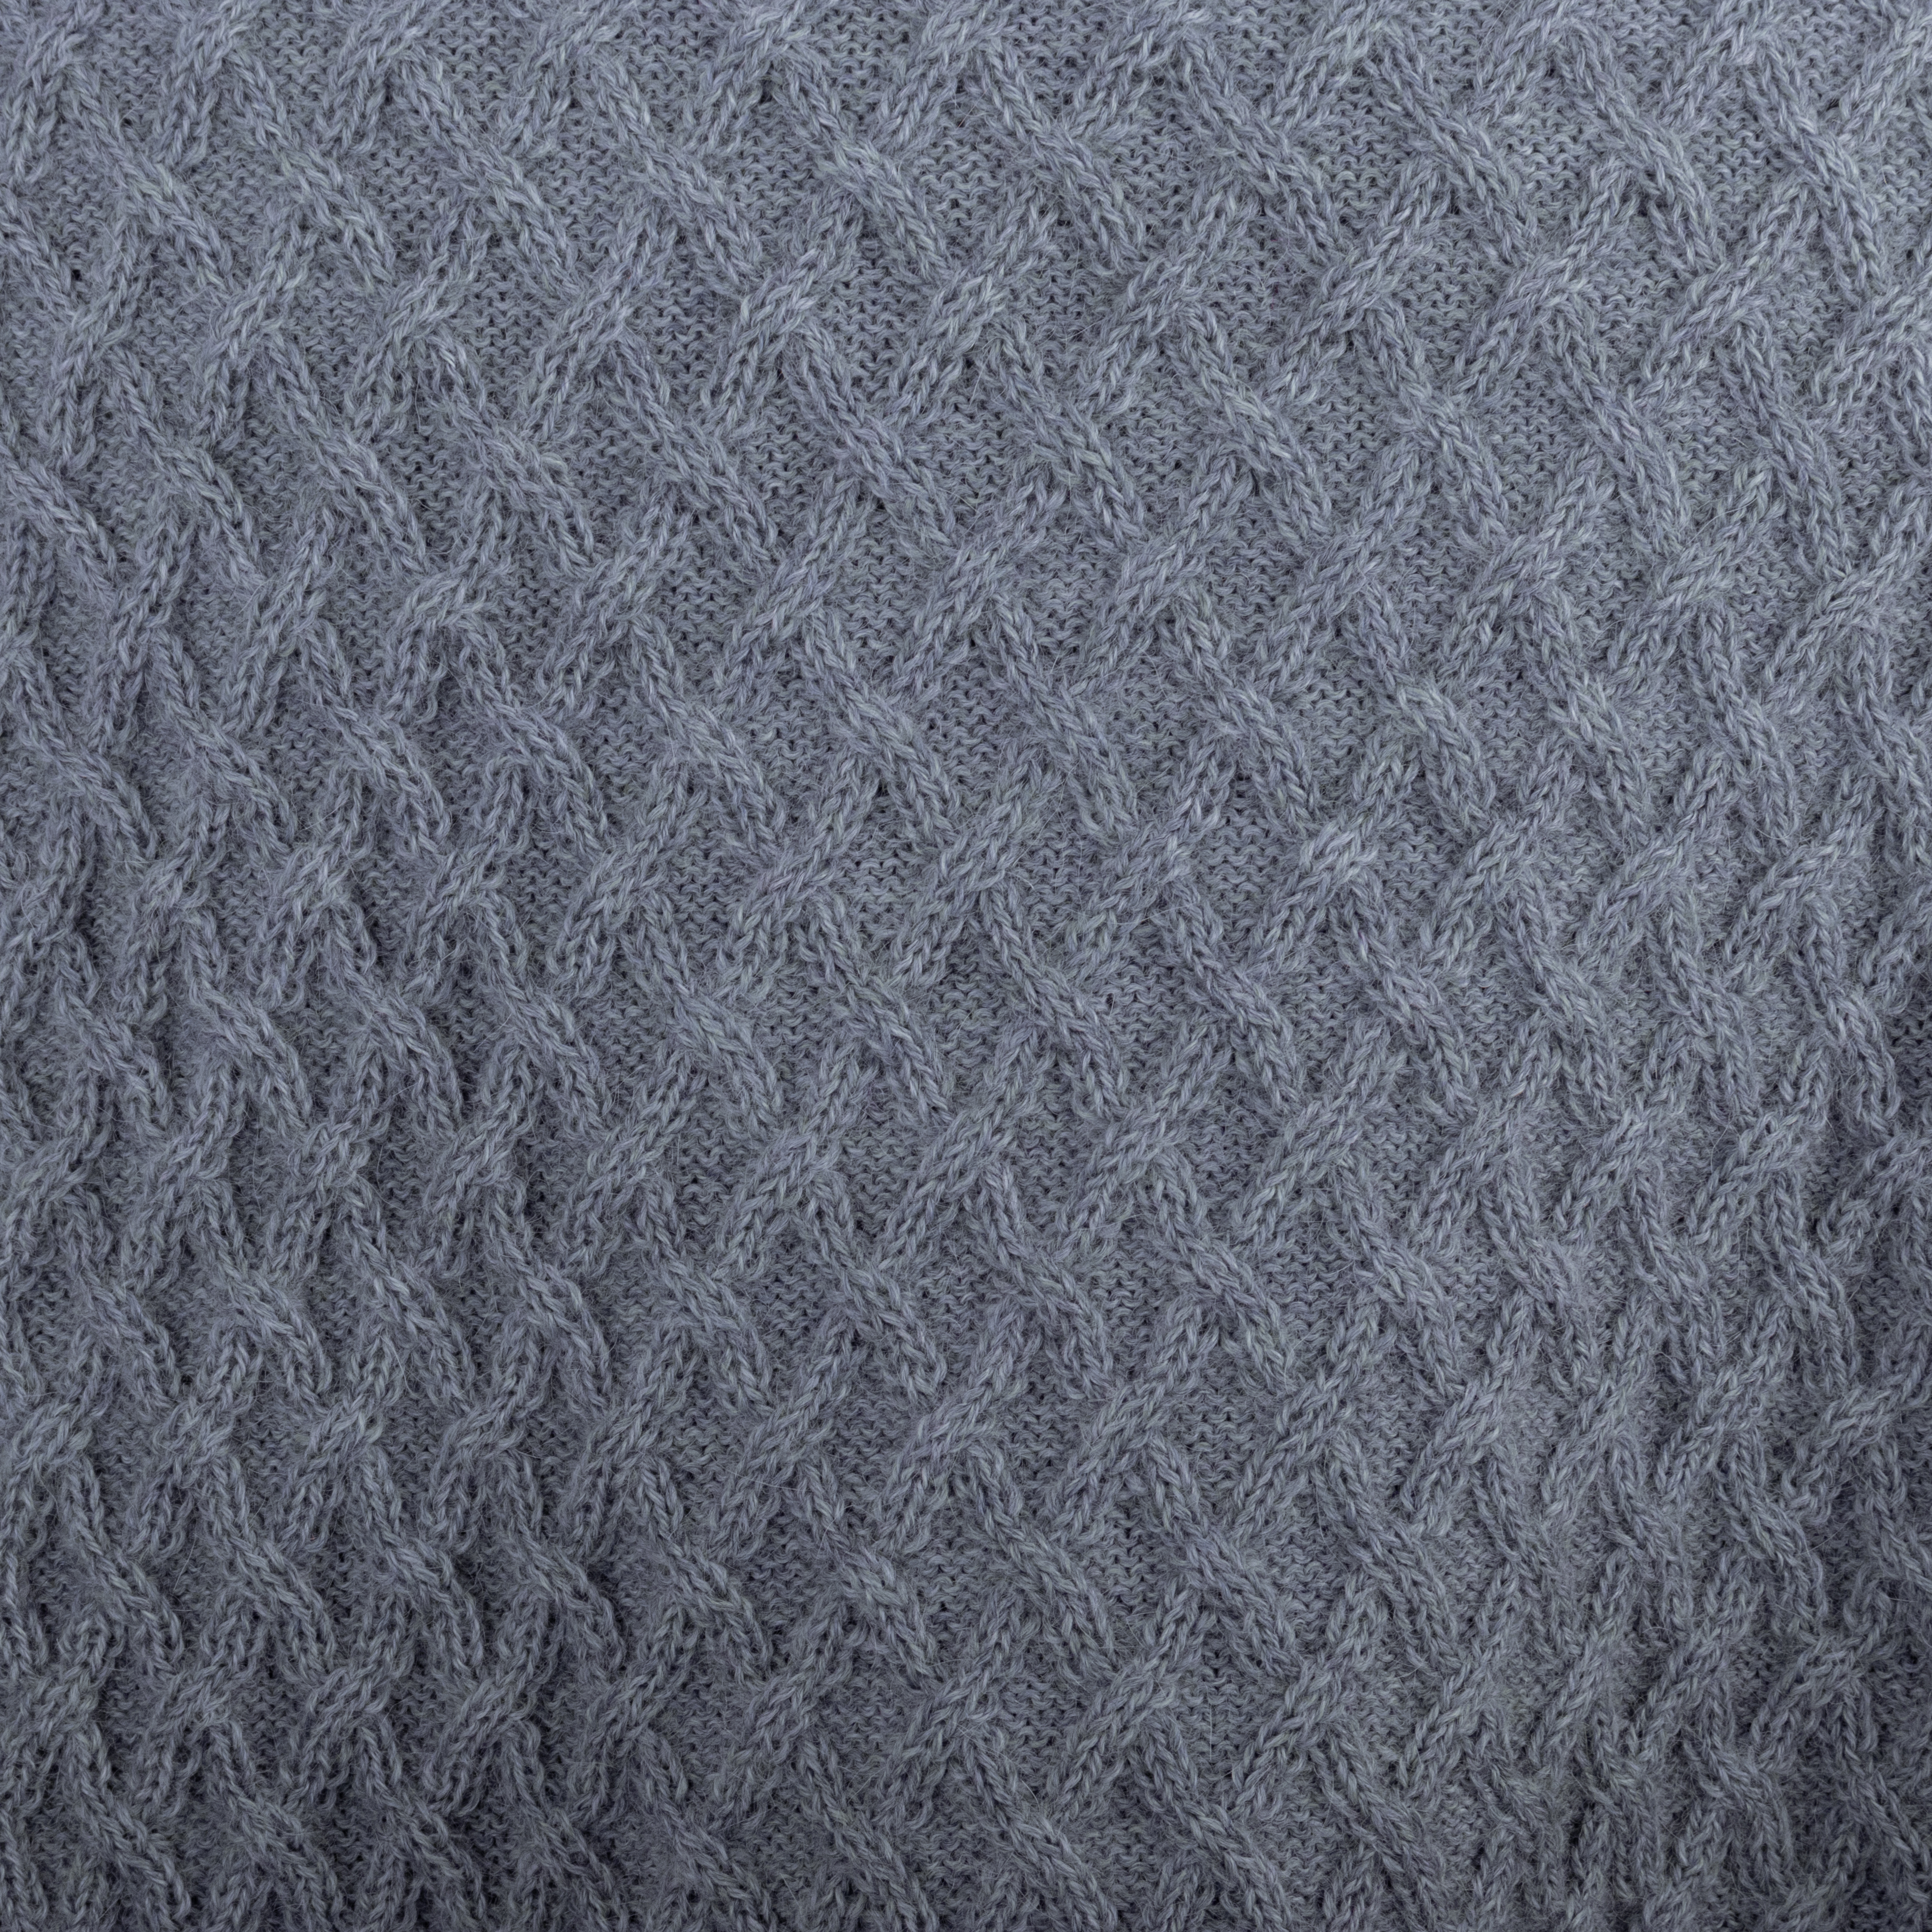 100% alpaca sweater, 'Serene Blue Trellis' - Knit Blue 100% Alpaca Sweater with Geometric Pattern